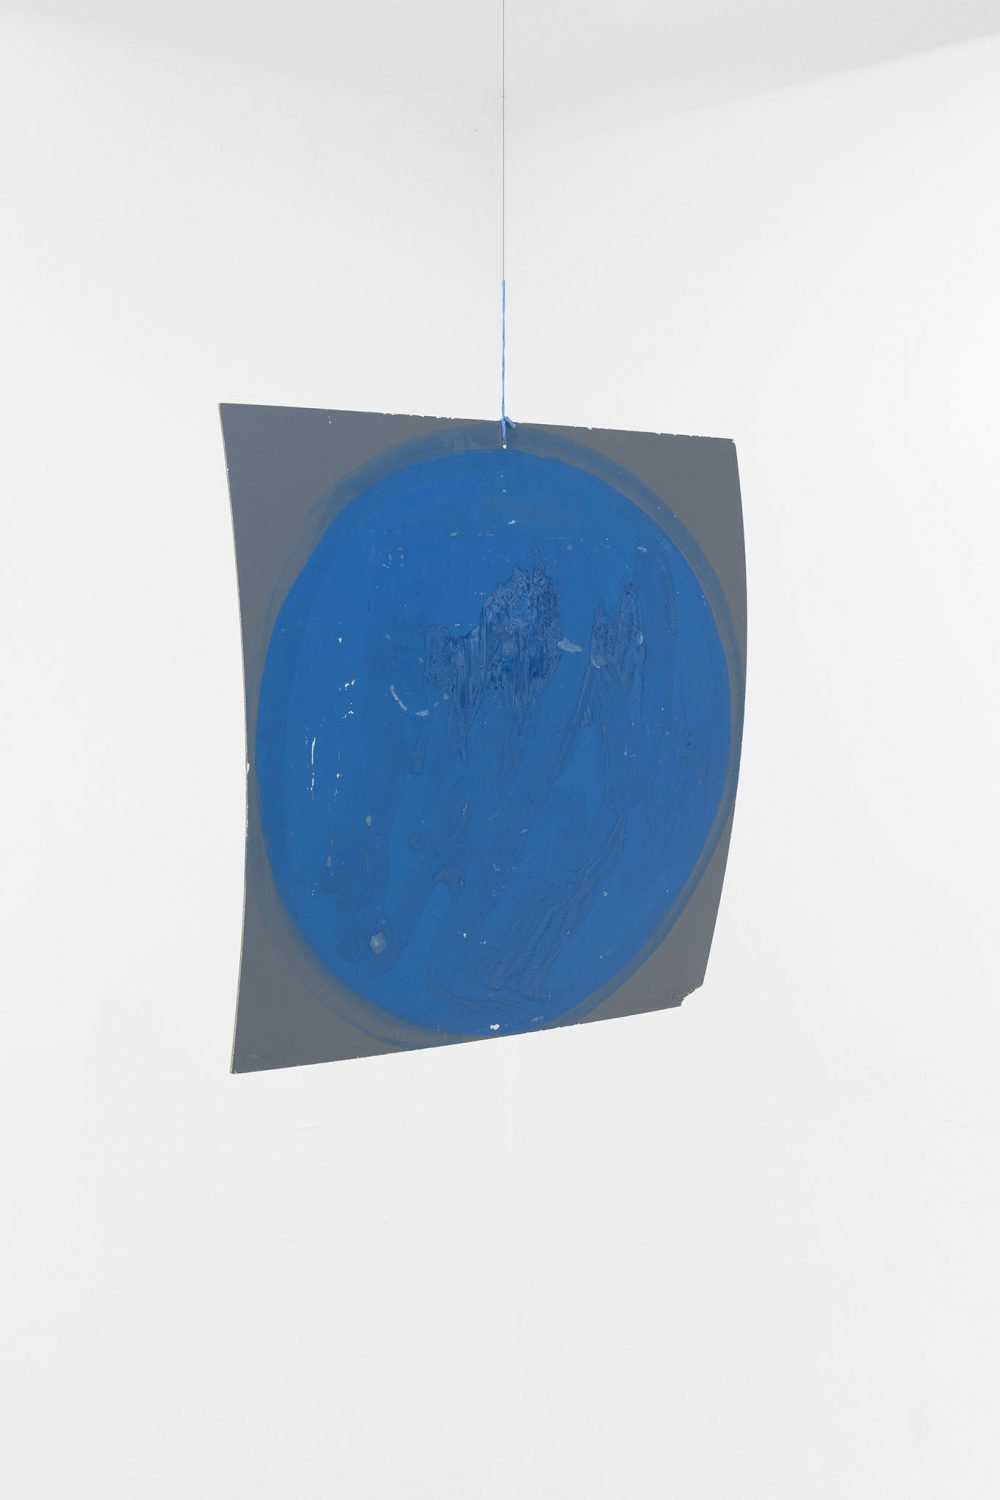 Stano FilkoFrom the cycle Astrocosmolonomogy, ca. 2000Reflective plexiglass, acrylic paint61 x 61 cm